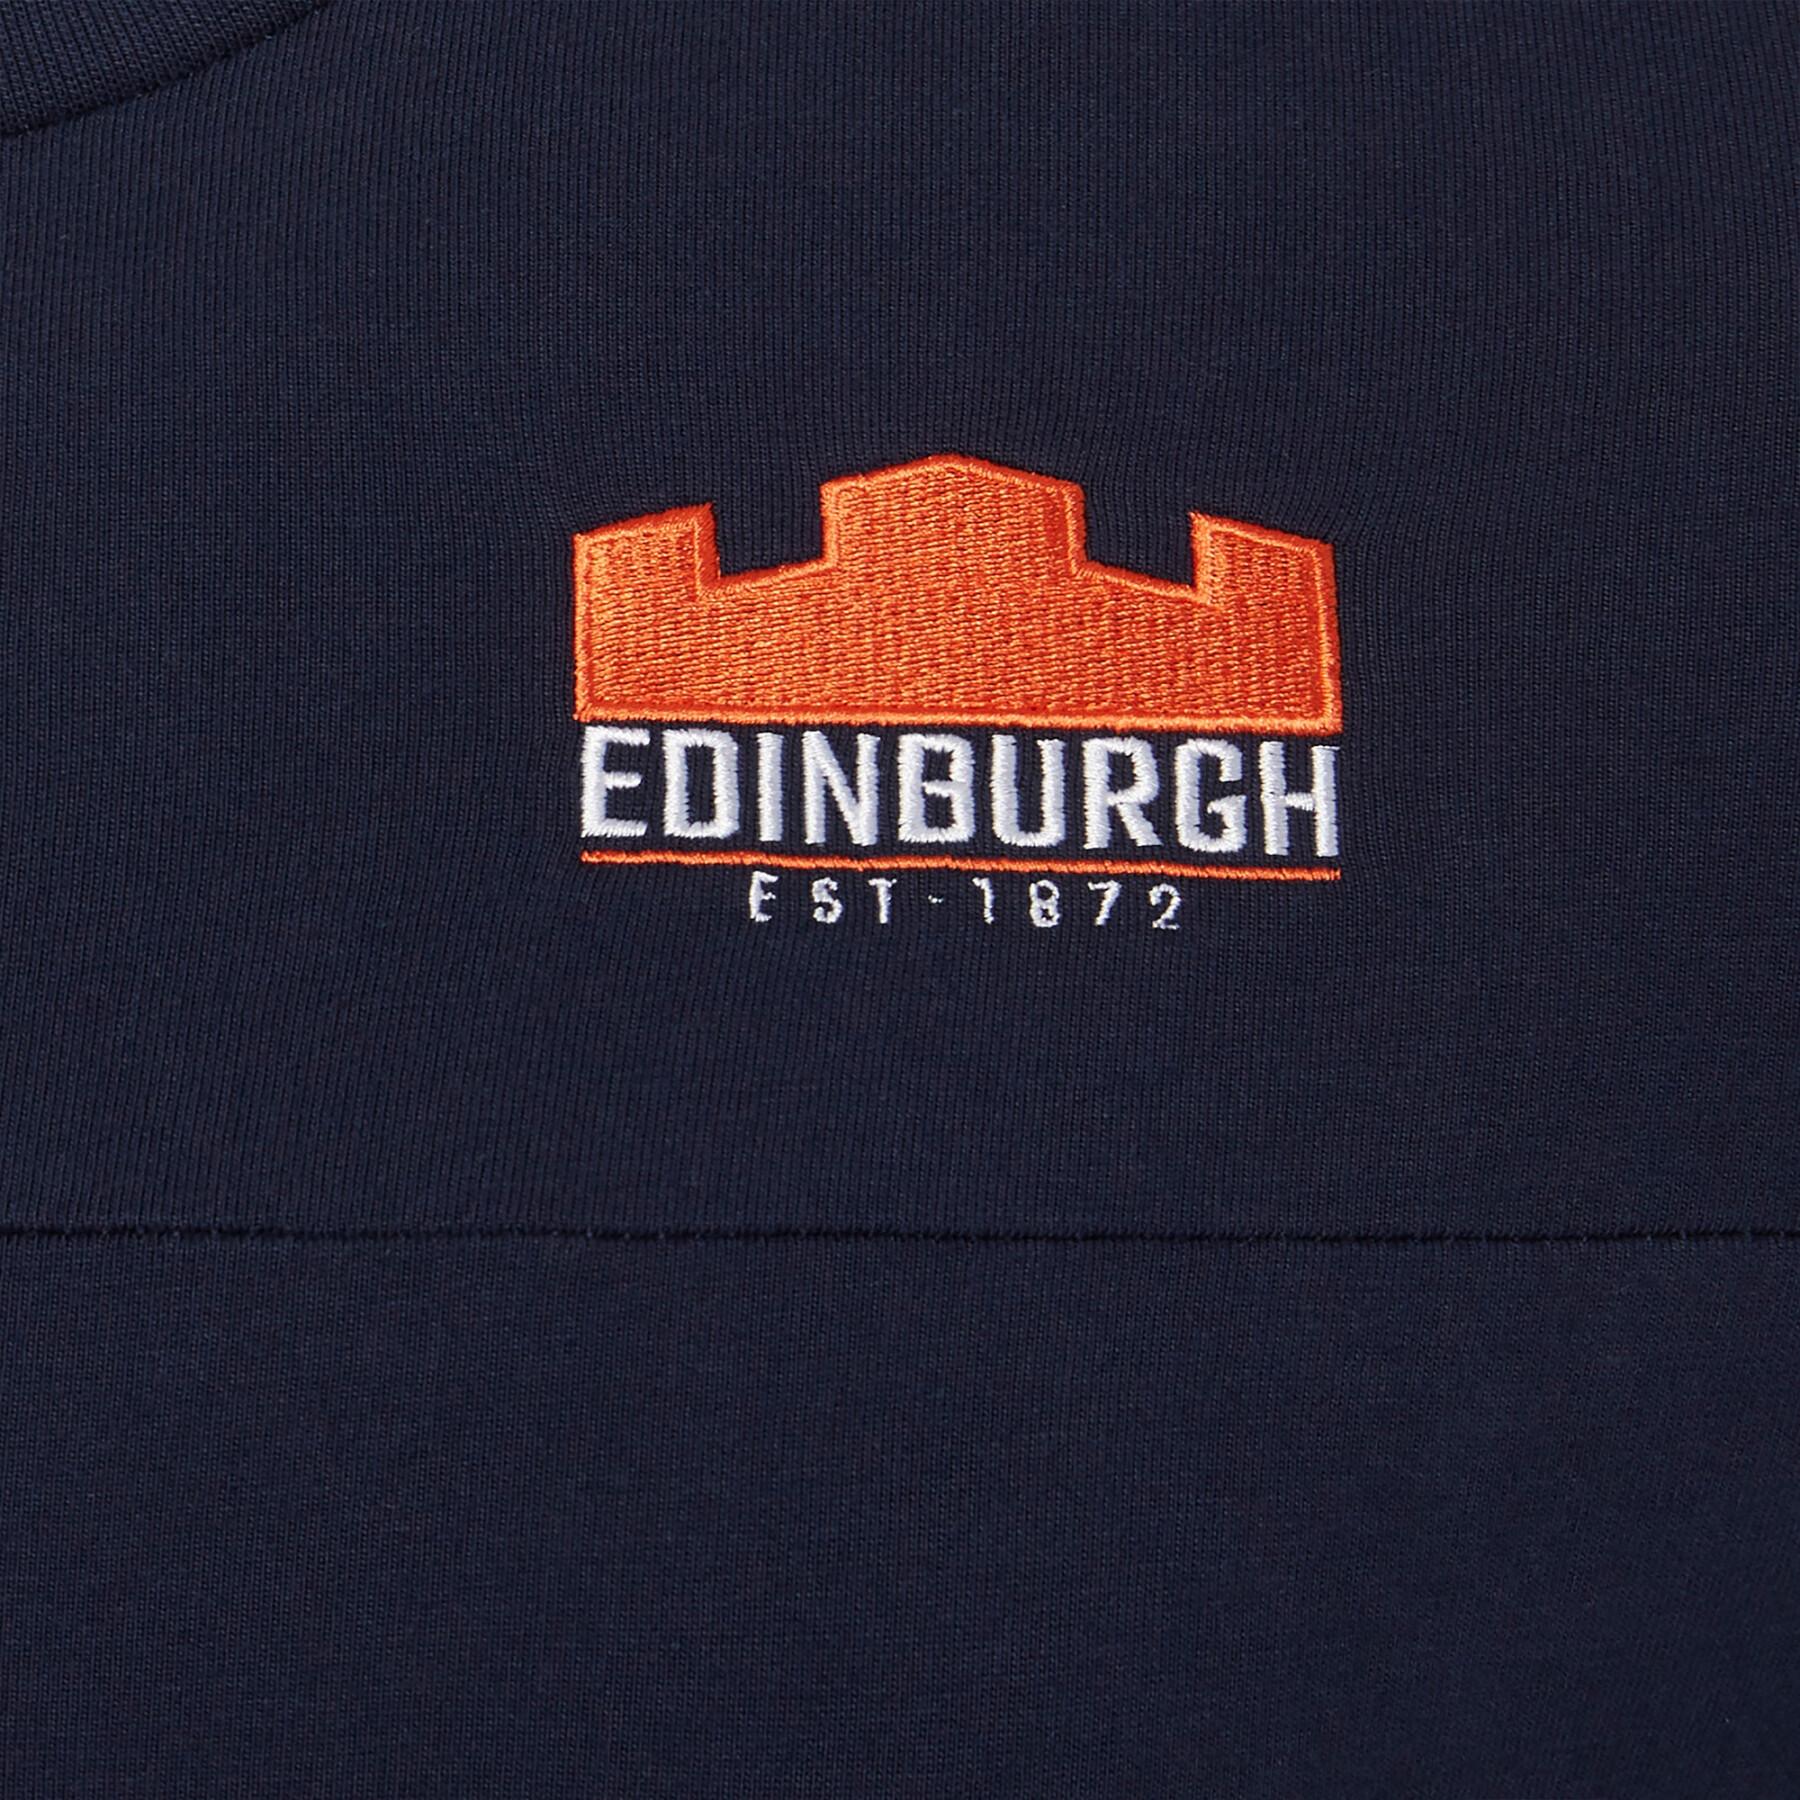 Camisa de viaje Édimbourg Rugby 2019/20